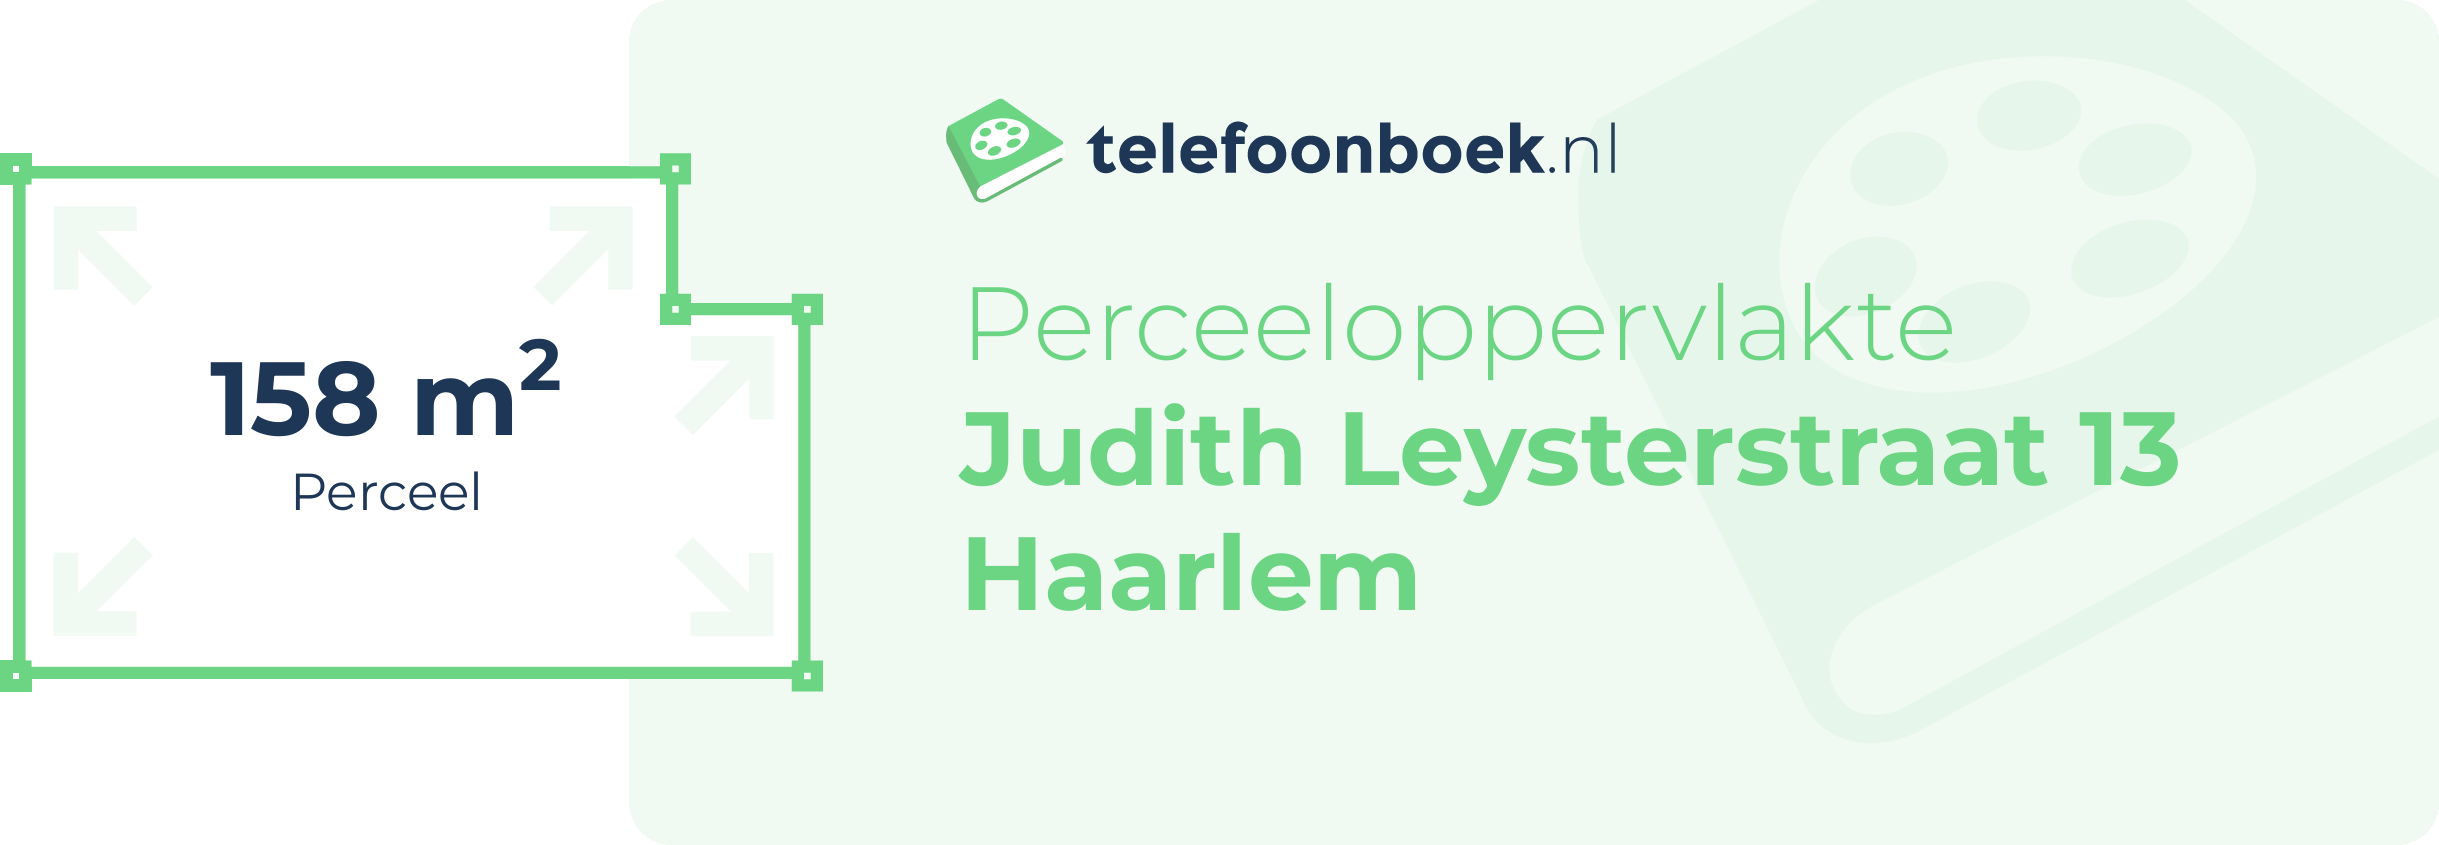 Perceeloppervlakte Judith Leysterstraat 13 Haarlem